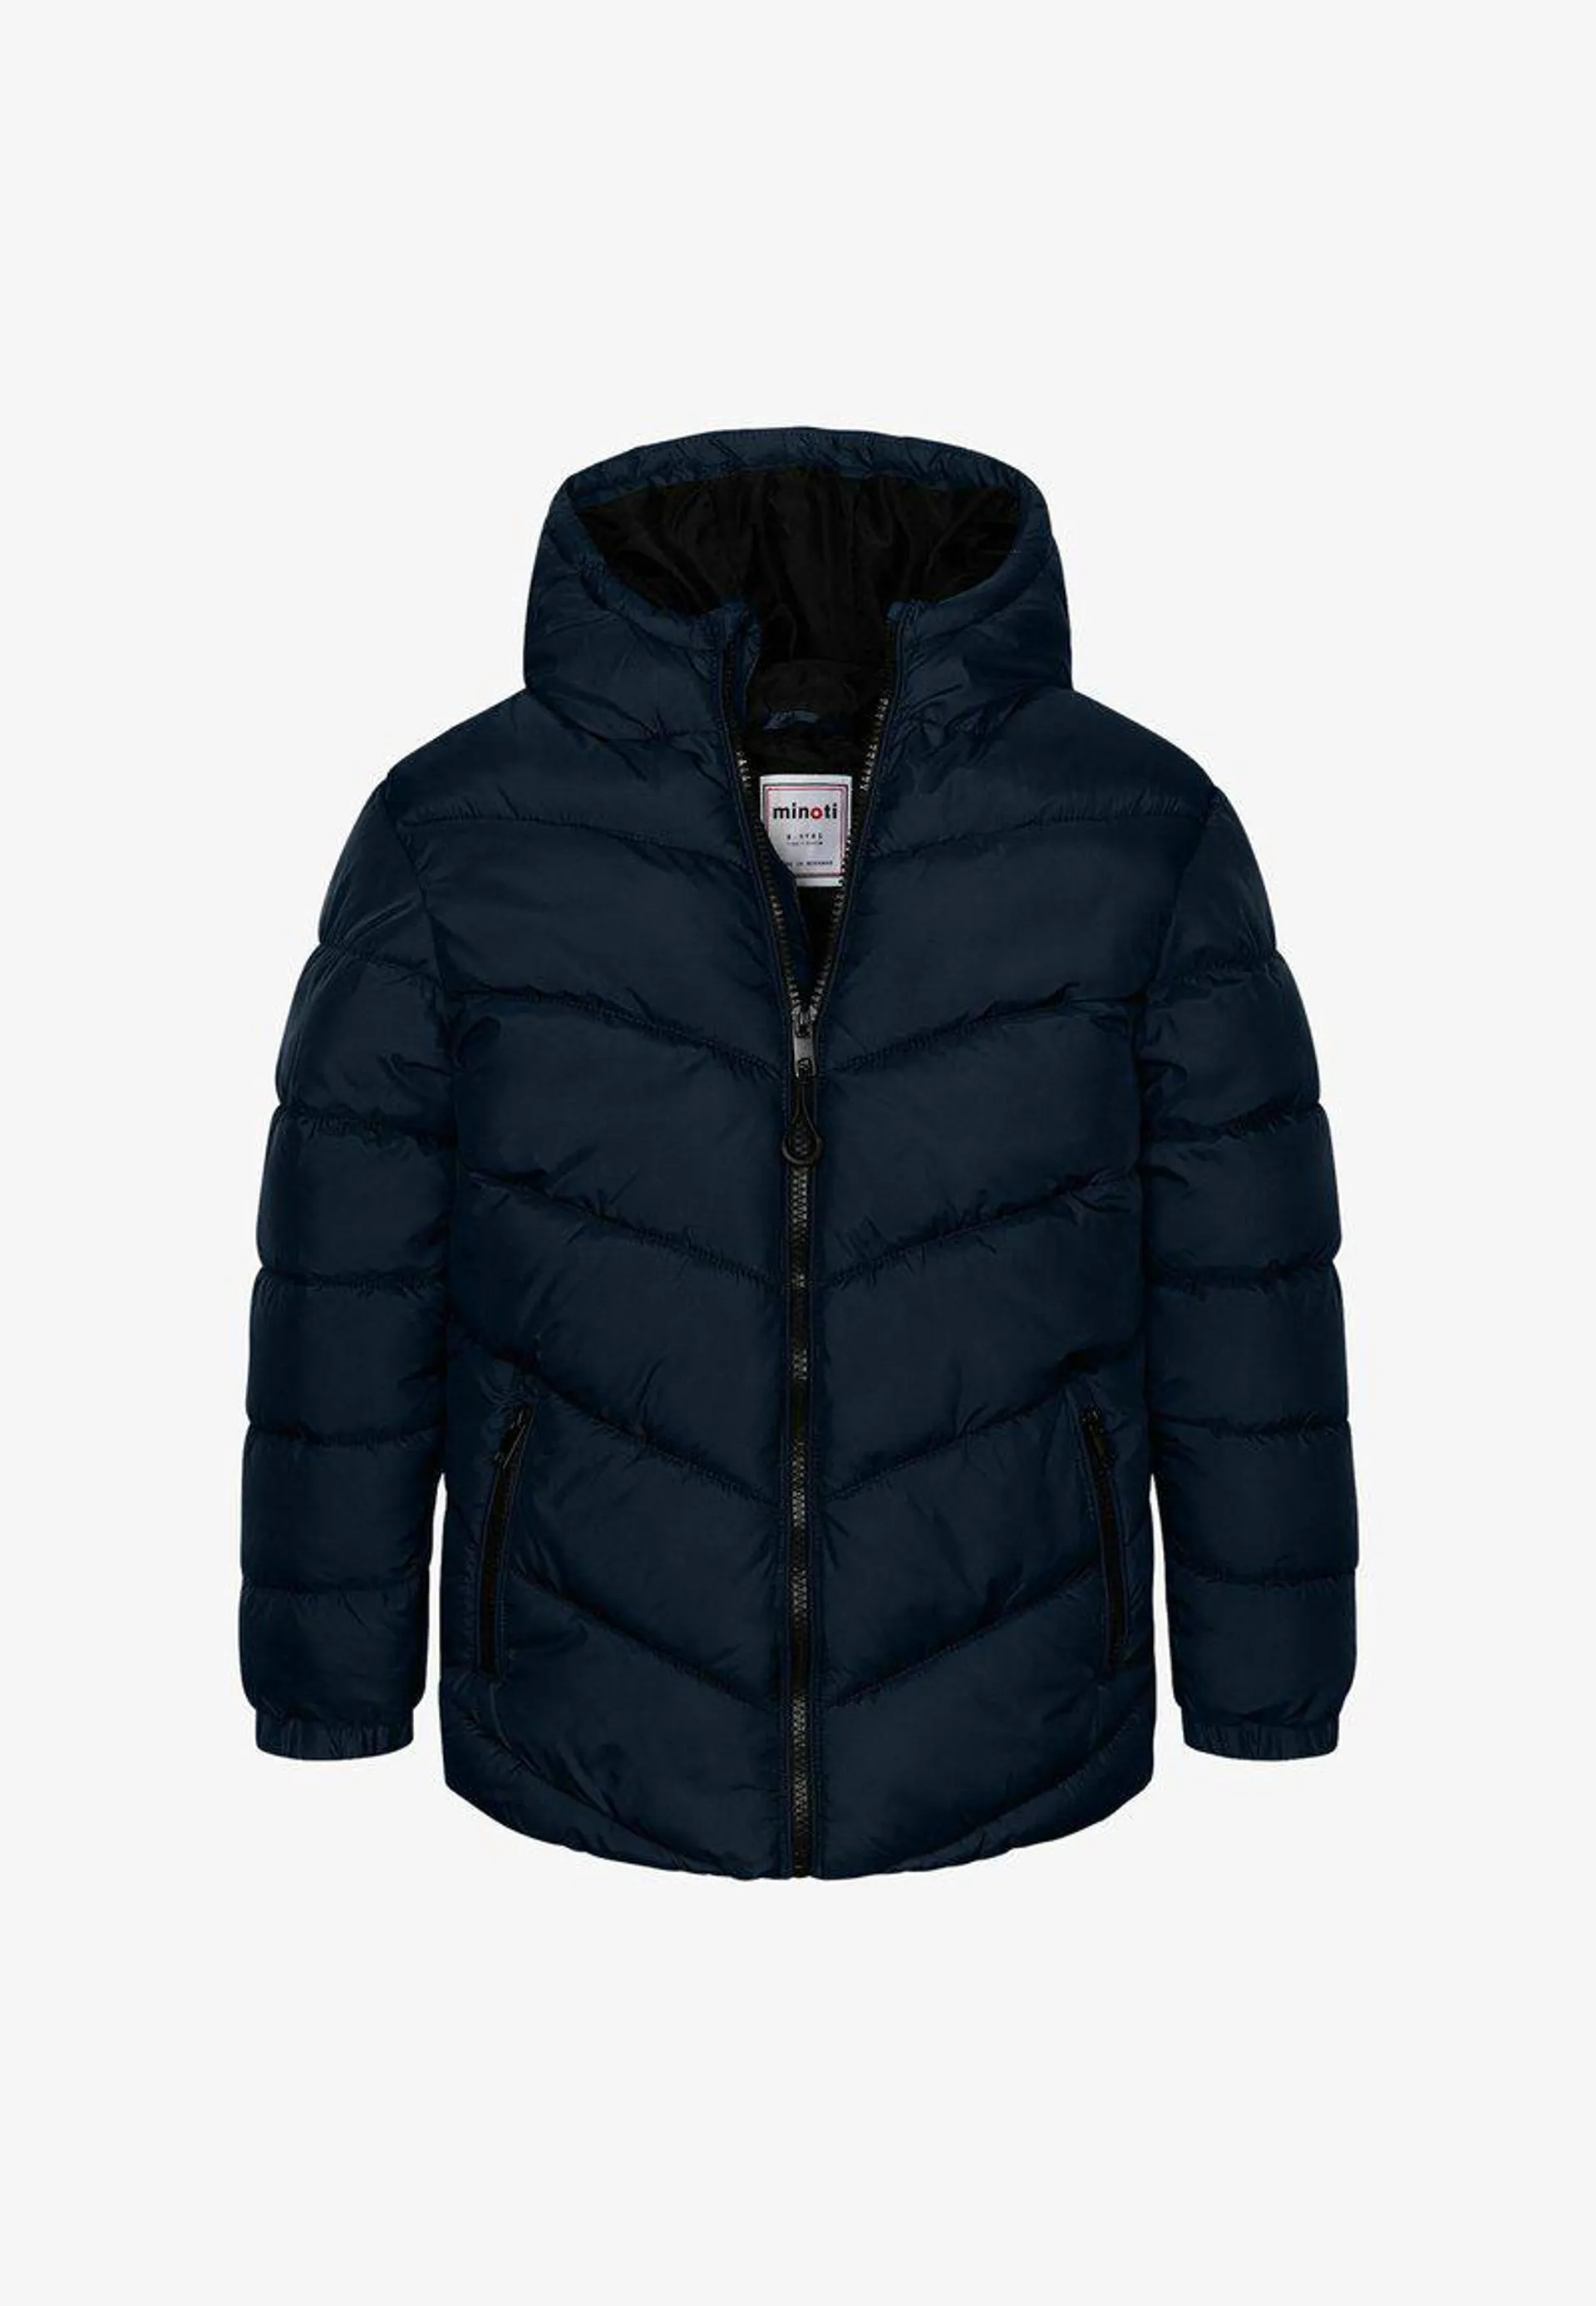 CHEVRON - Winter jacket